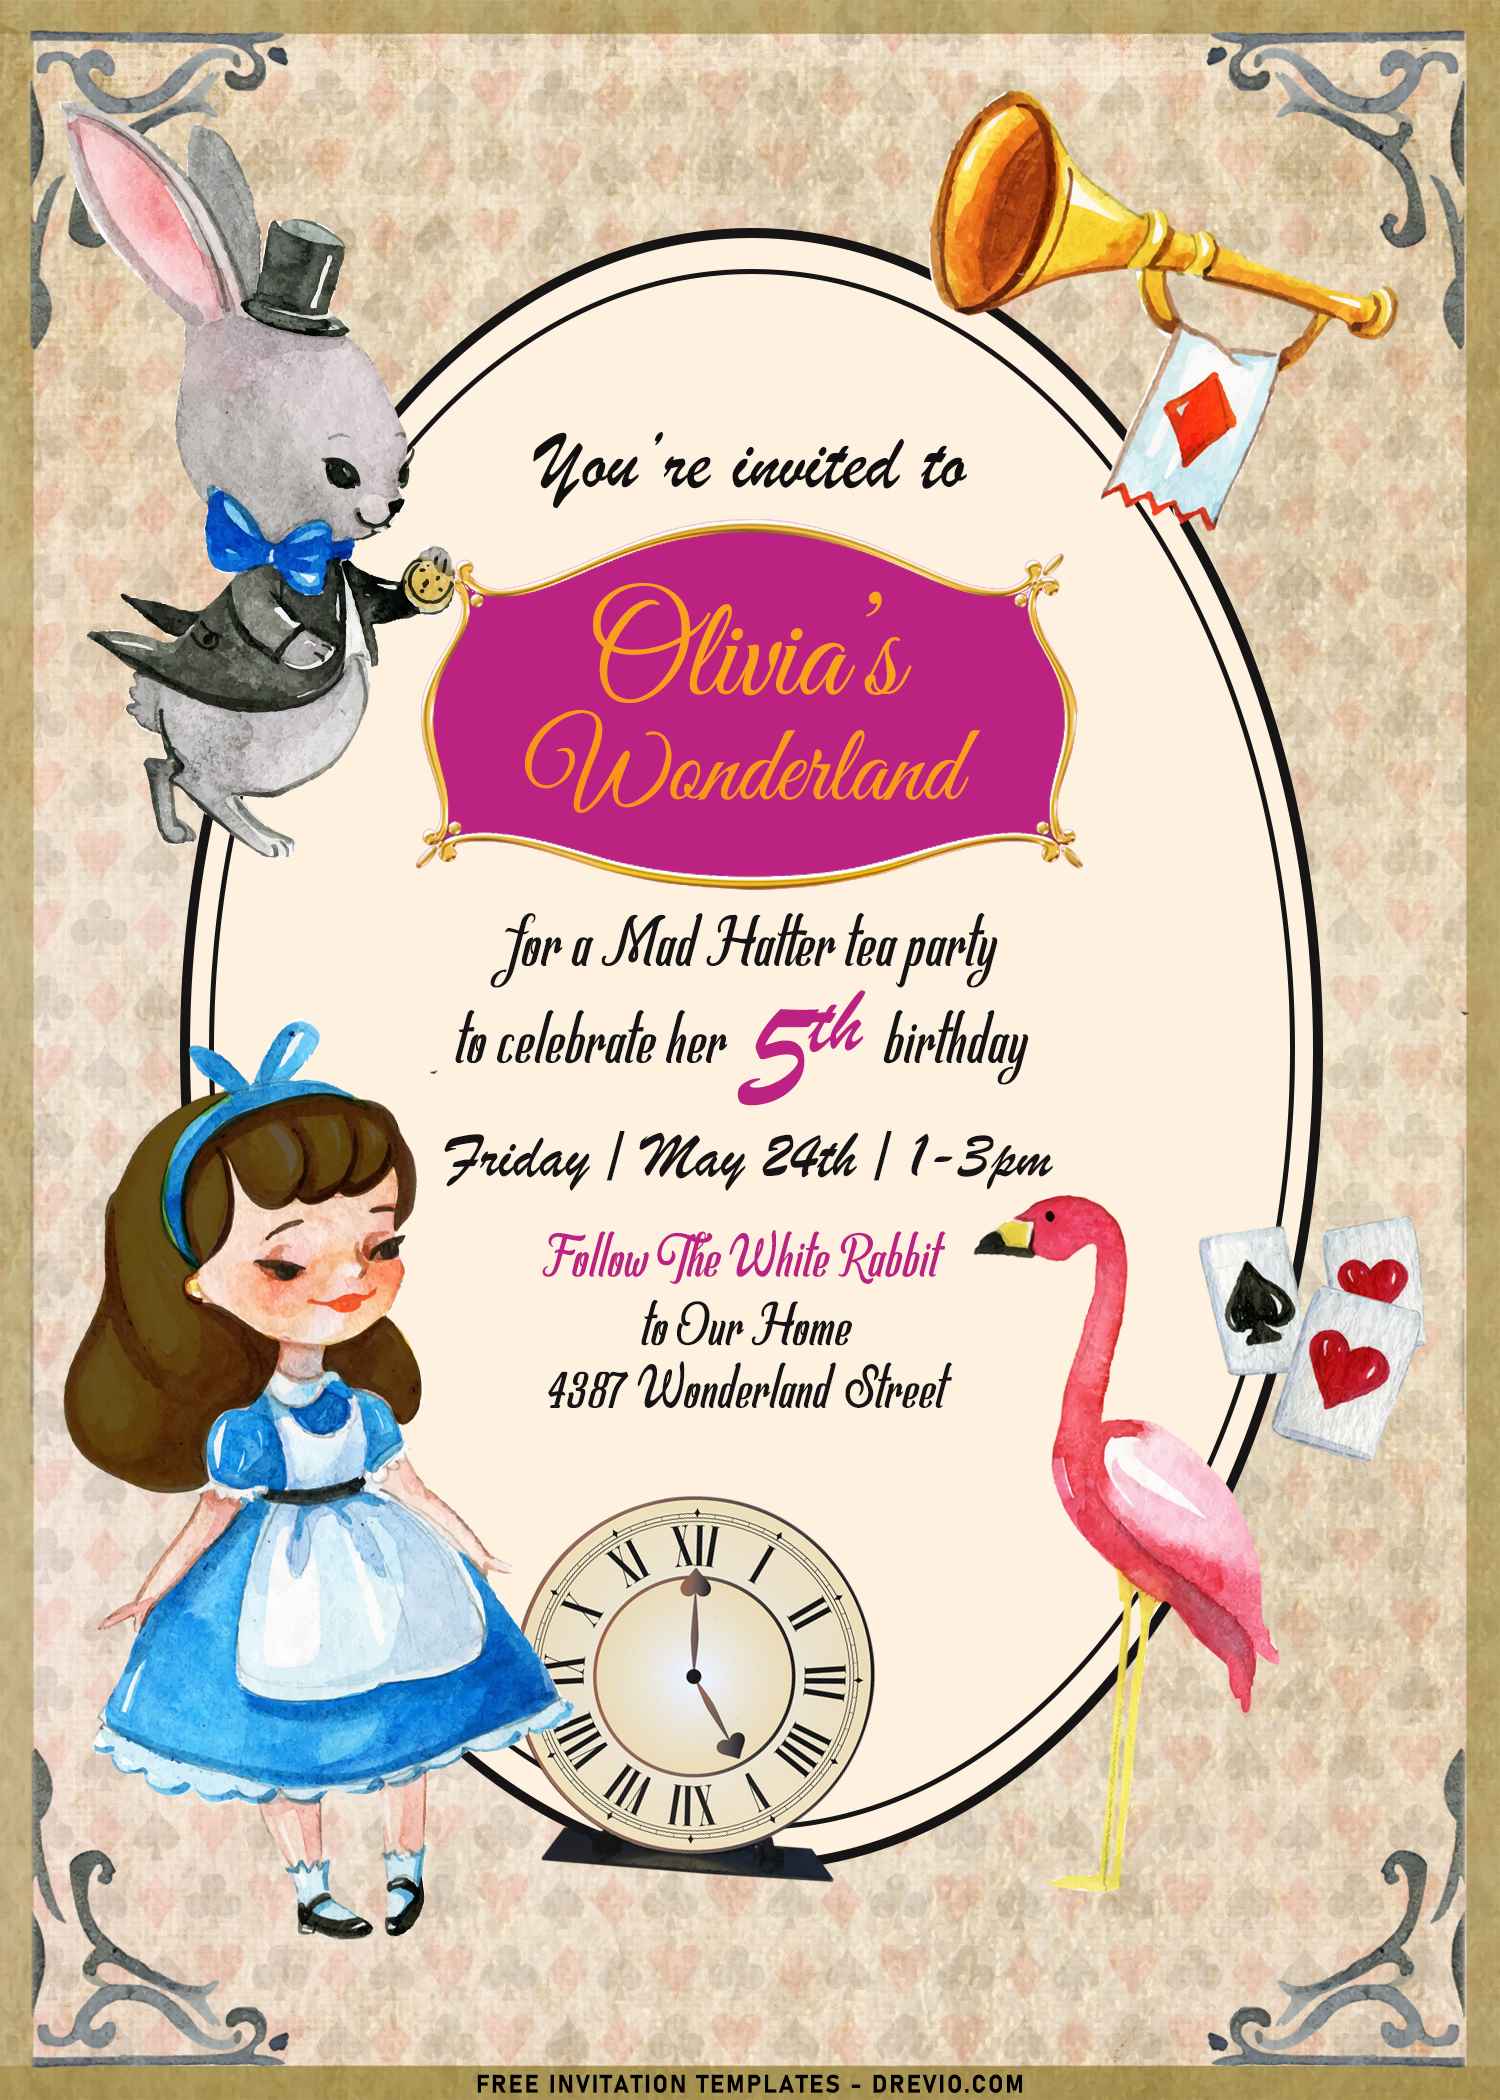 Vintage Alice in Wonderland Invitations for a Mad Hatters Tea